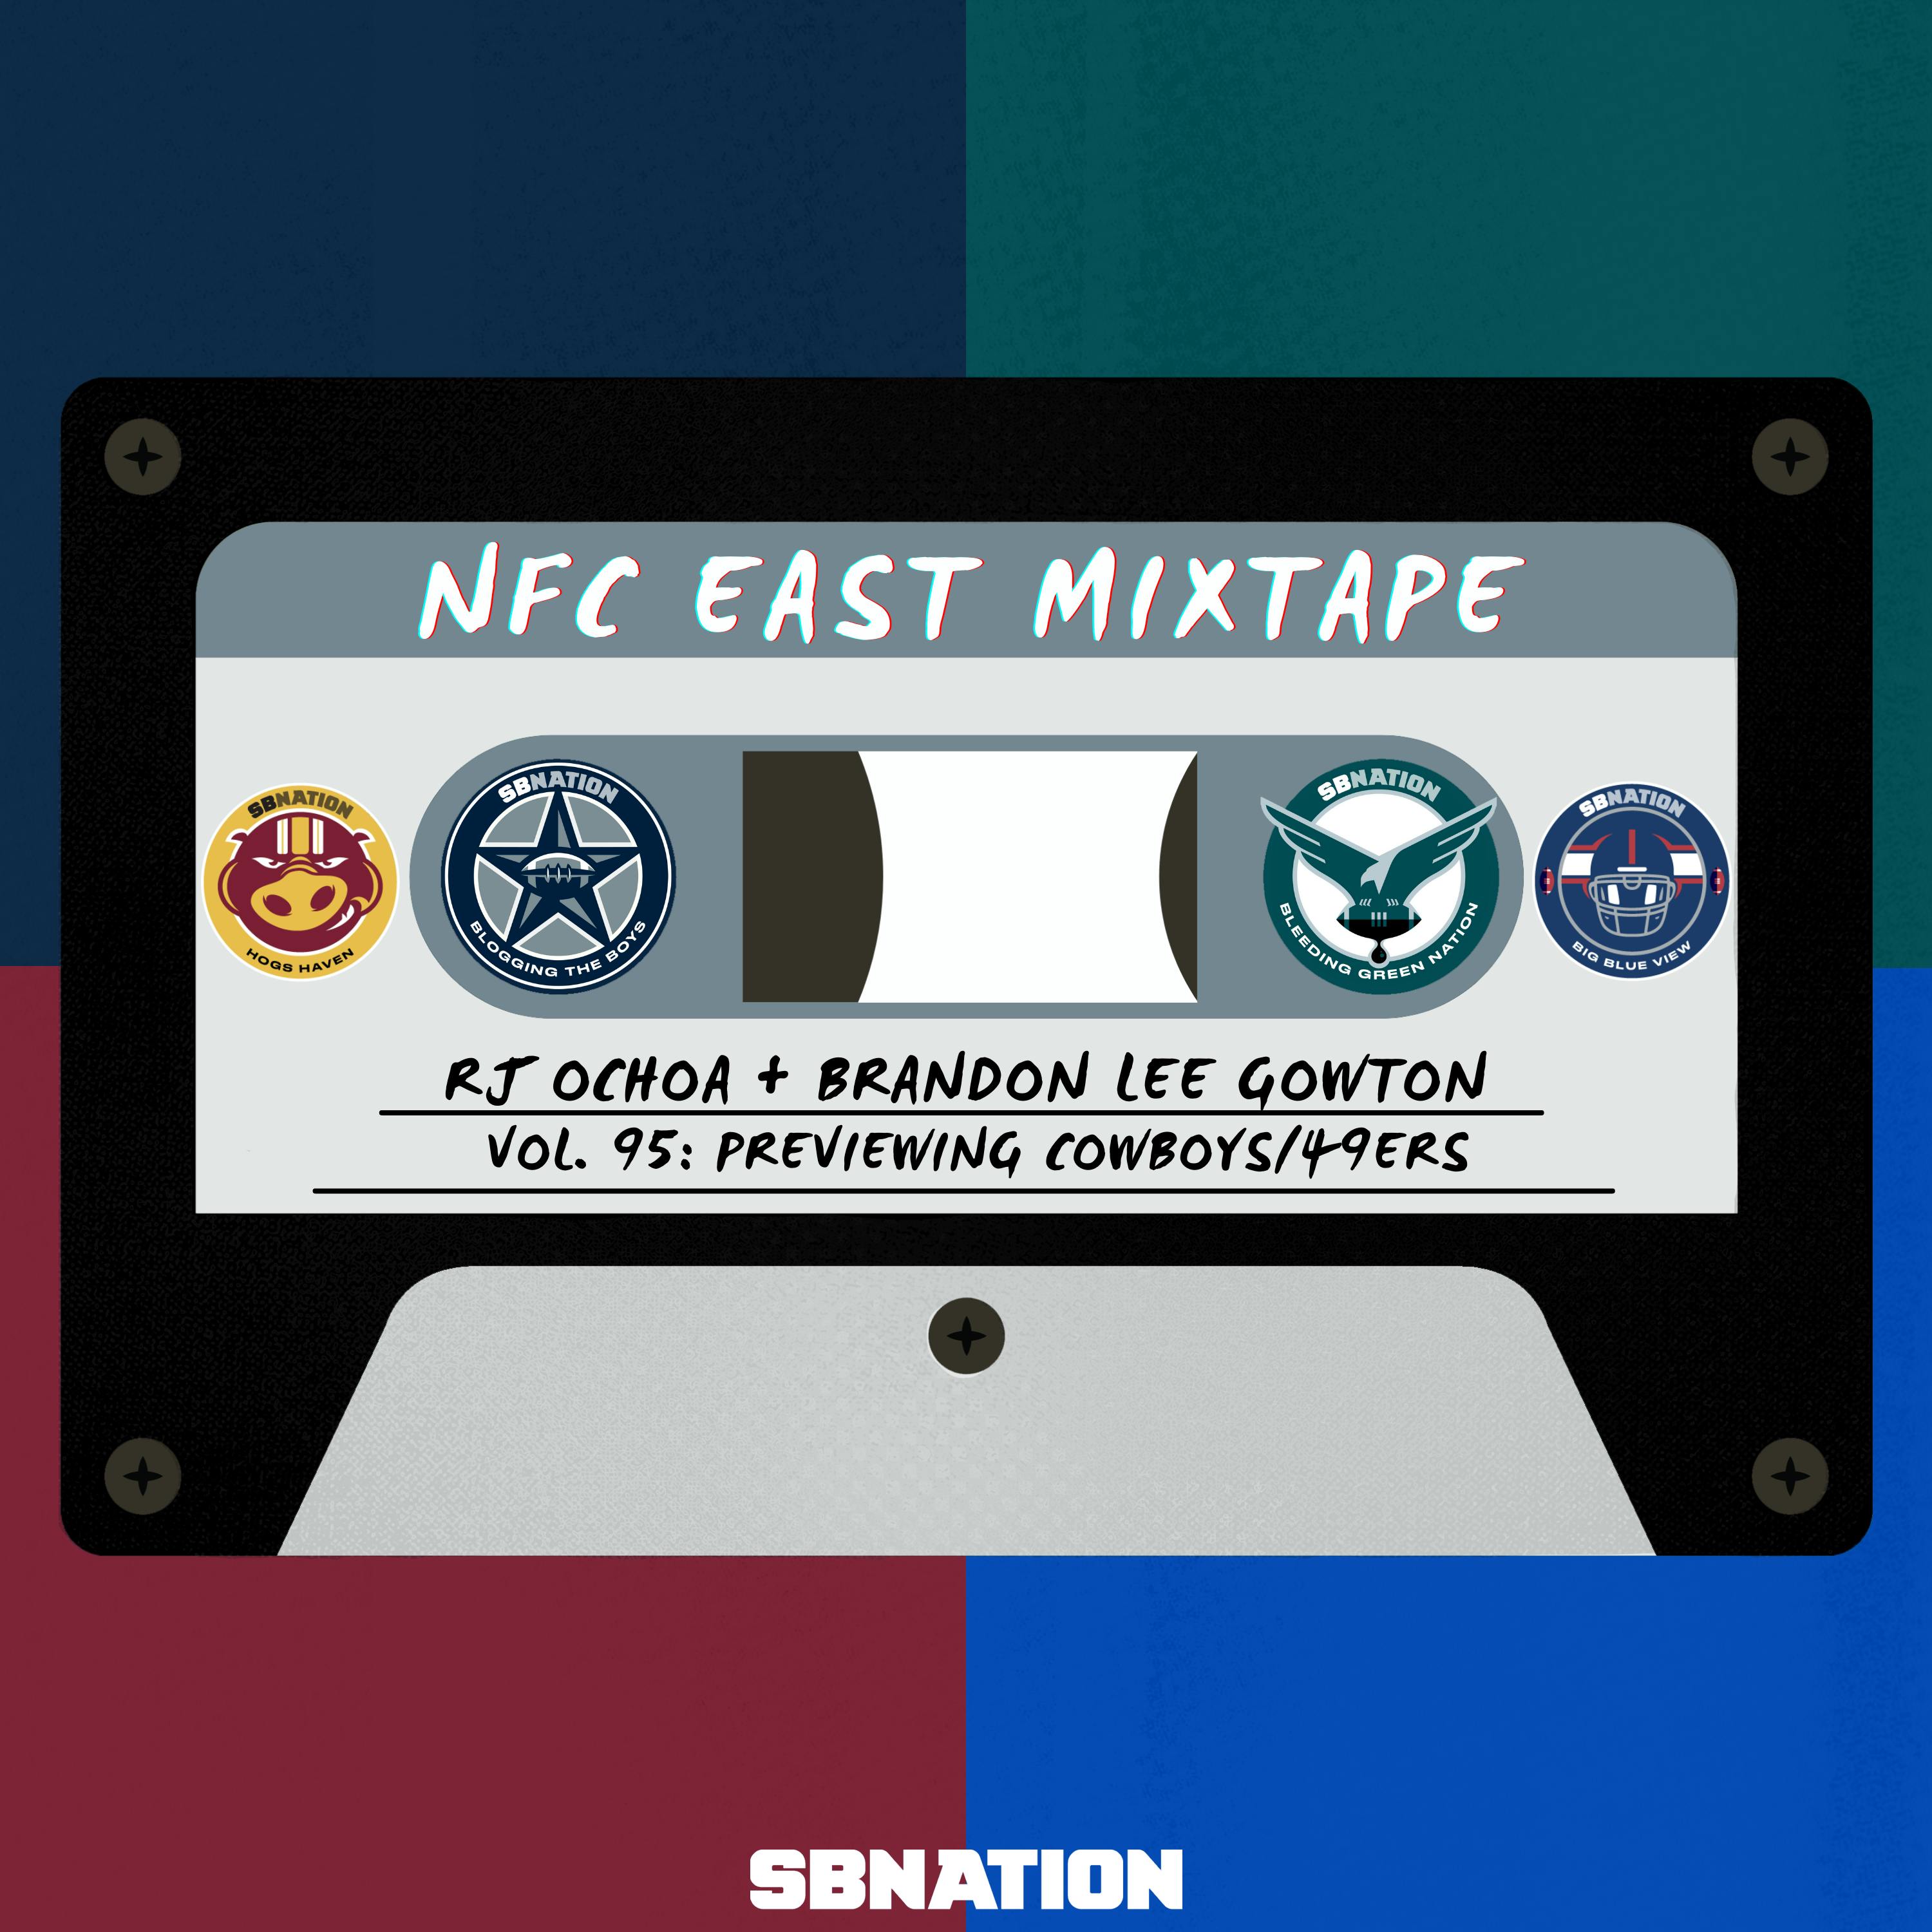 NFC East Mixtape Vol. 95: Previewing Cowboys/49ers